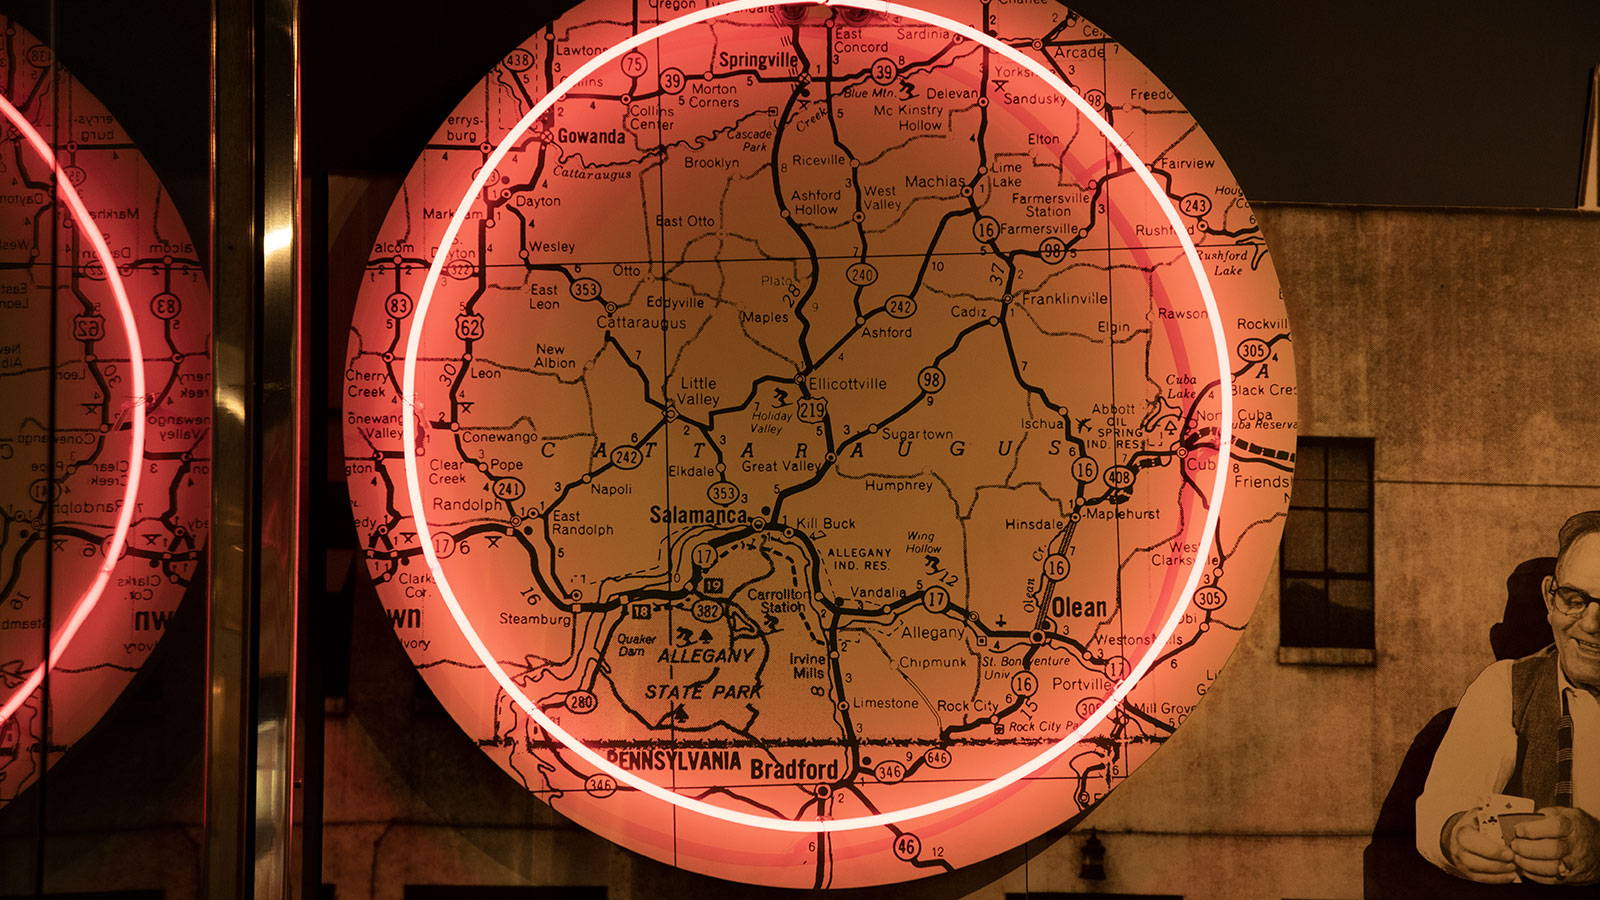 The Magic Circle map on display.